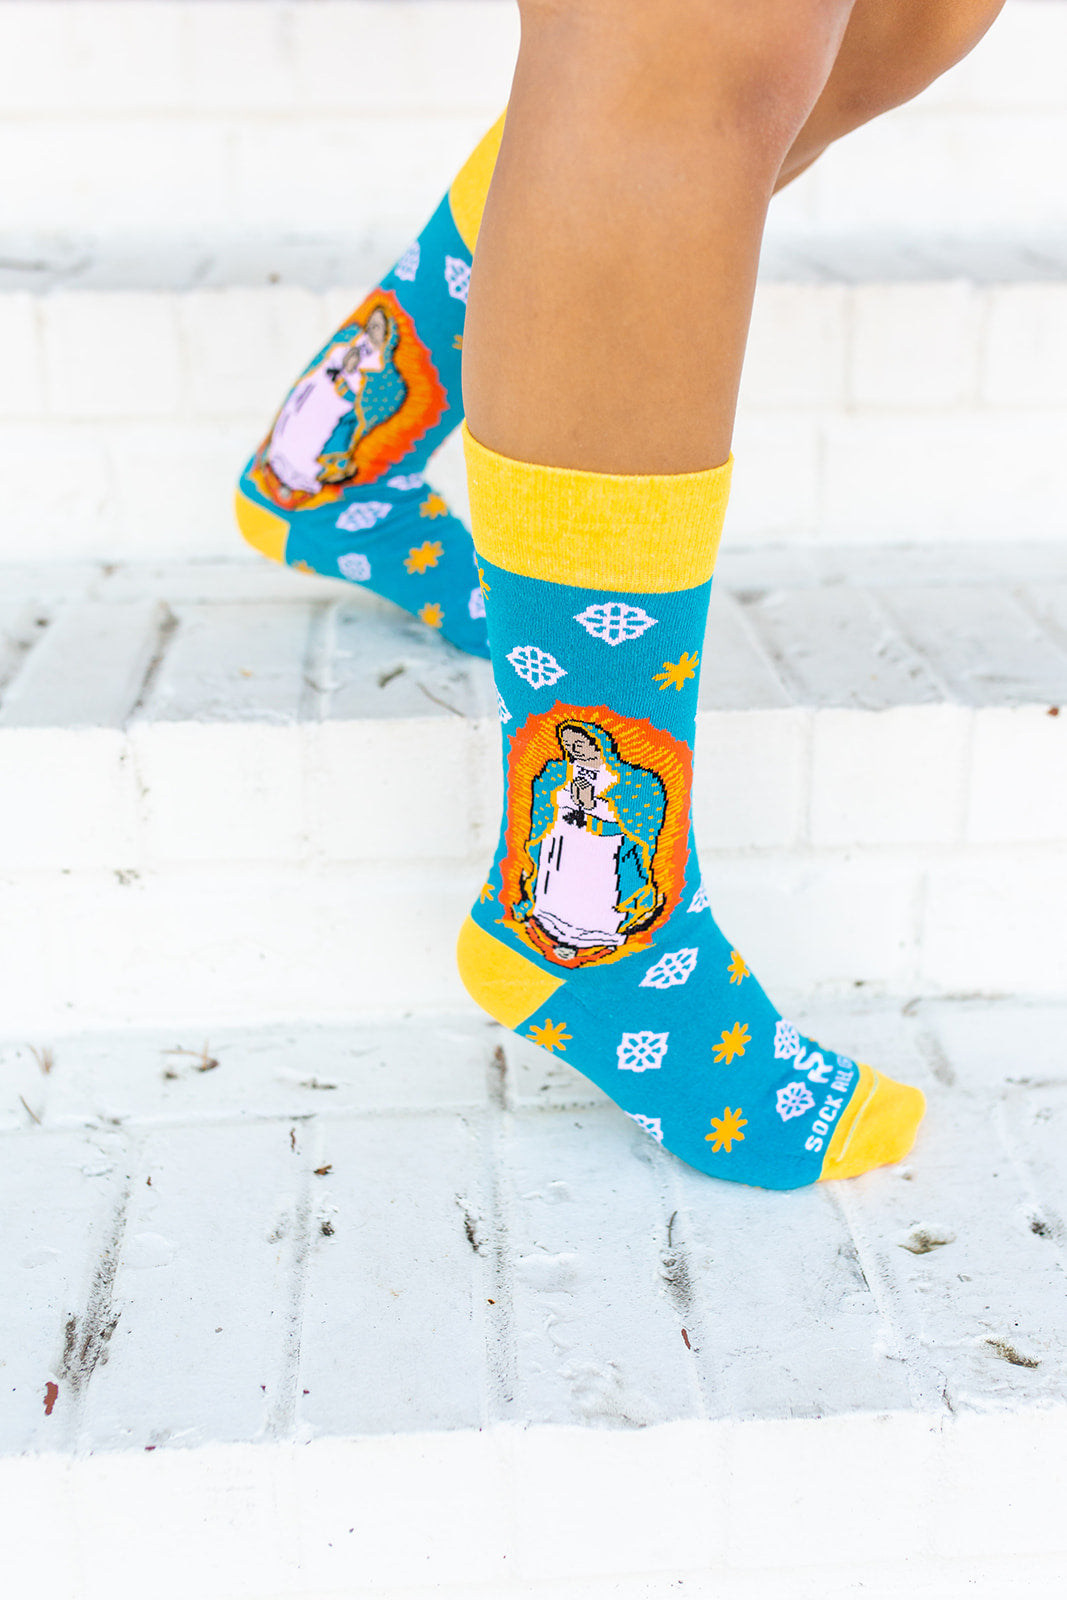 La Virgen de Guadalupe Socks – Toonymania